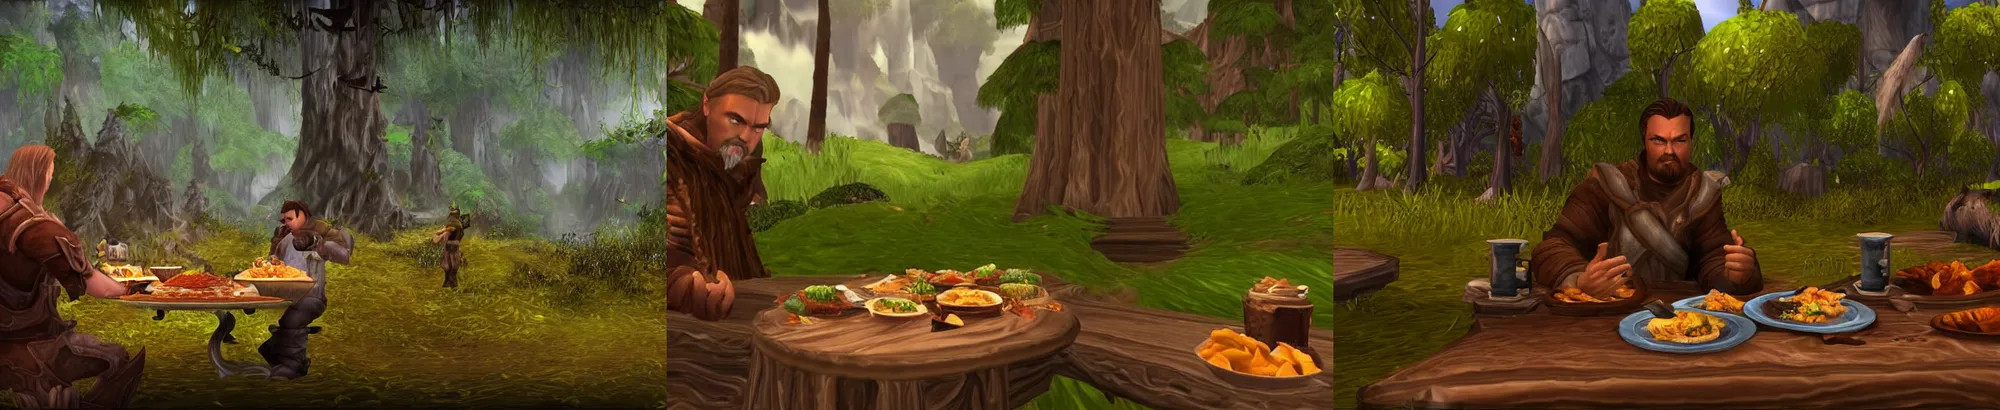 Prompt: leonardo dicaprio eating food inside world of warcraft elwynn forest, pc screen image.